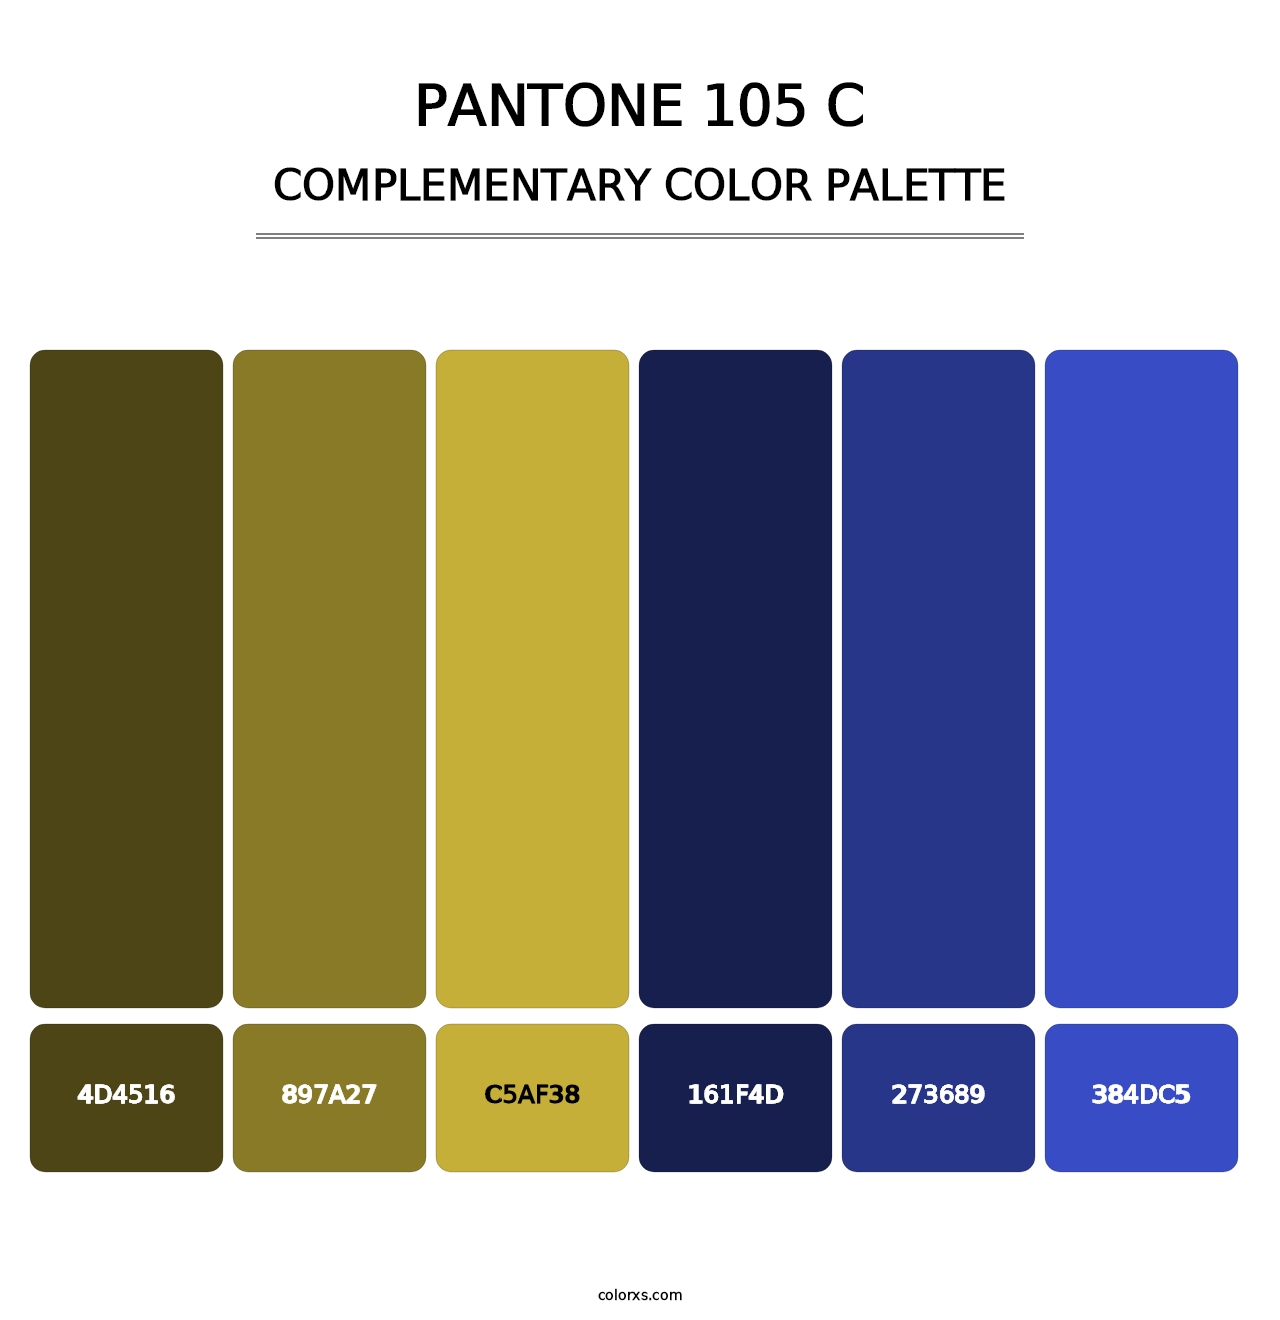 PANTONE 105 C - Complementary Color Palette